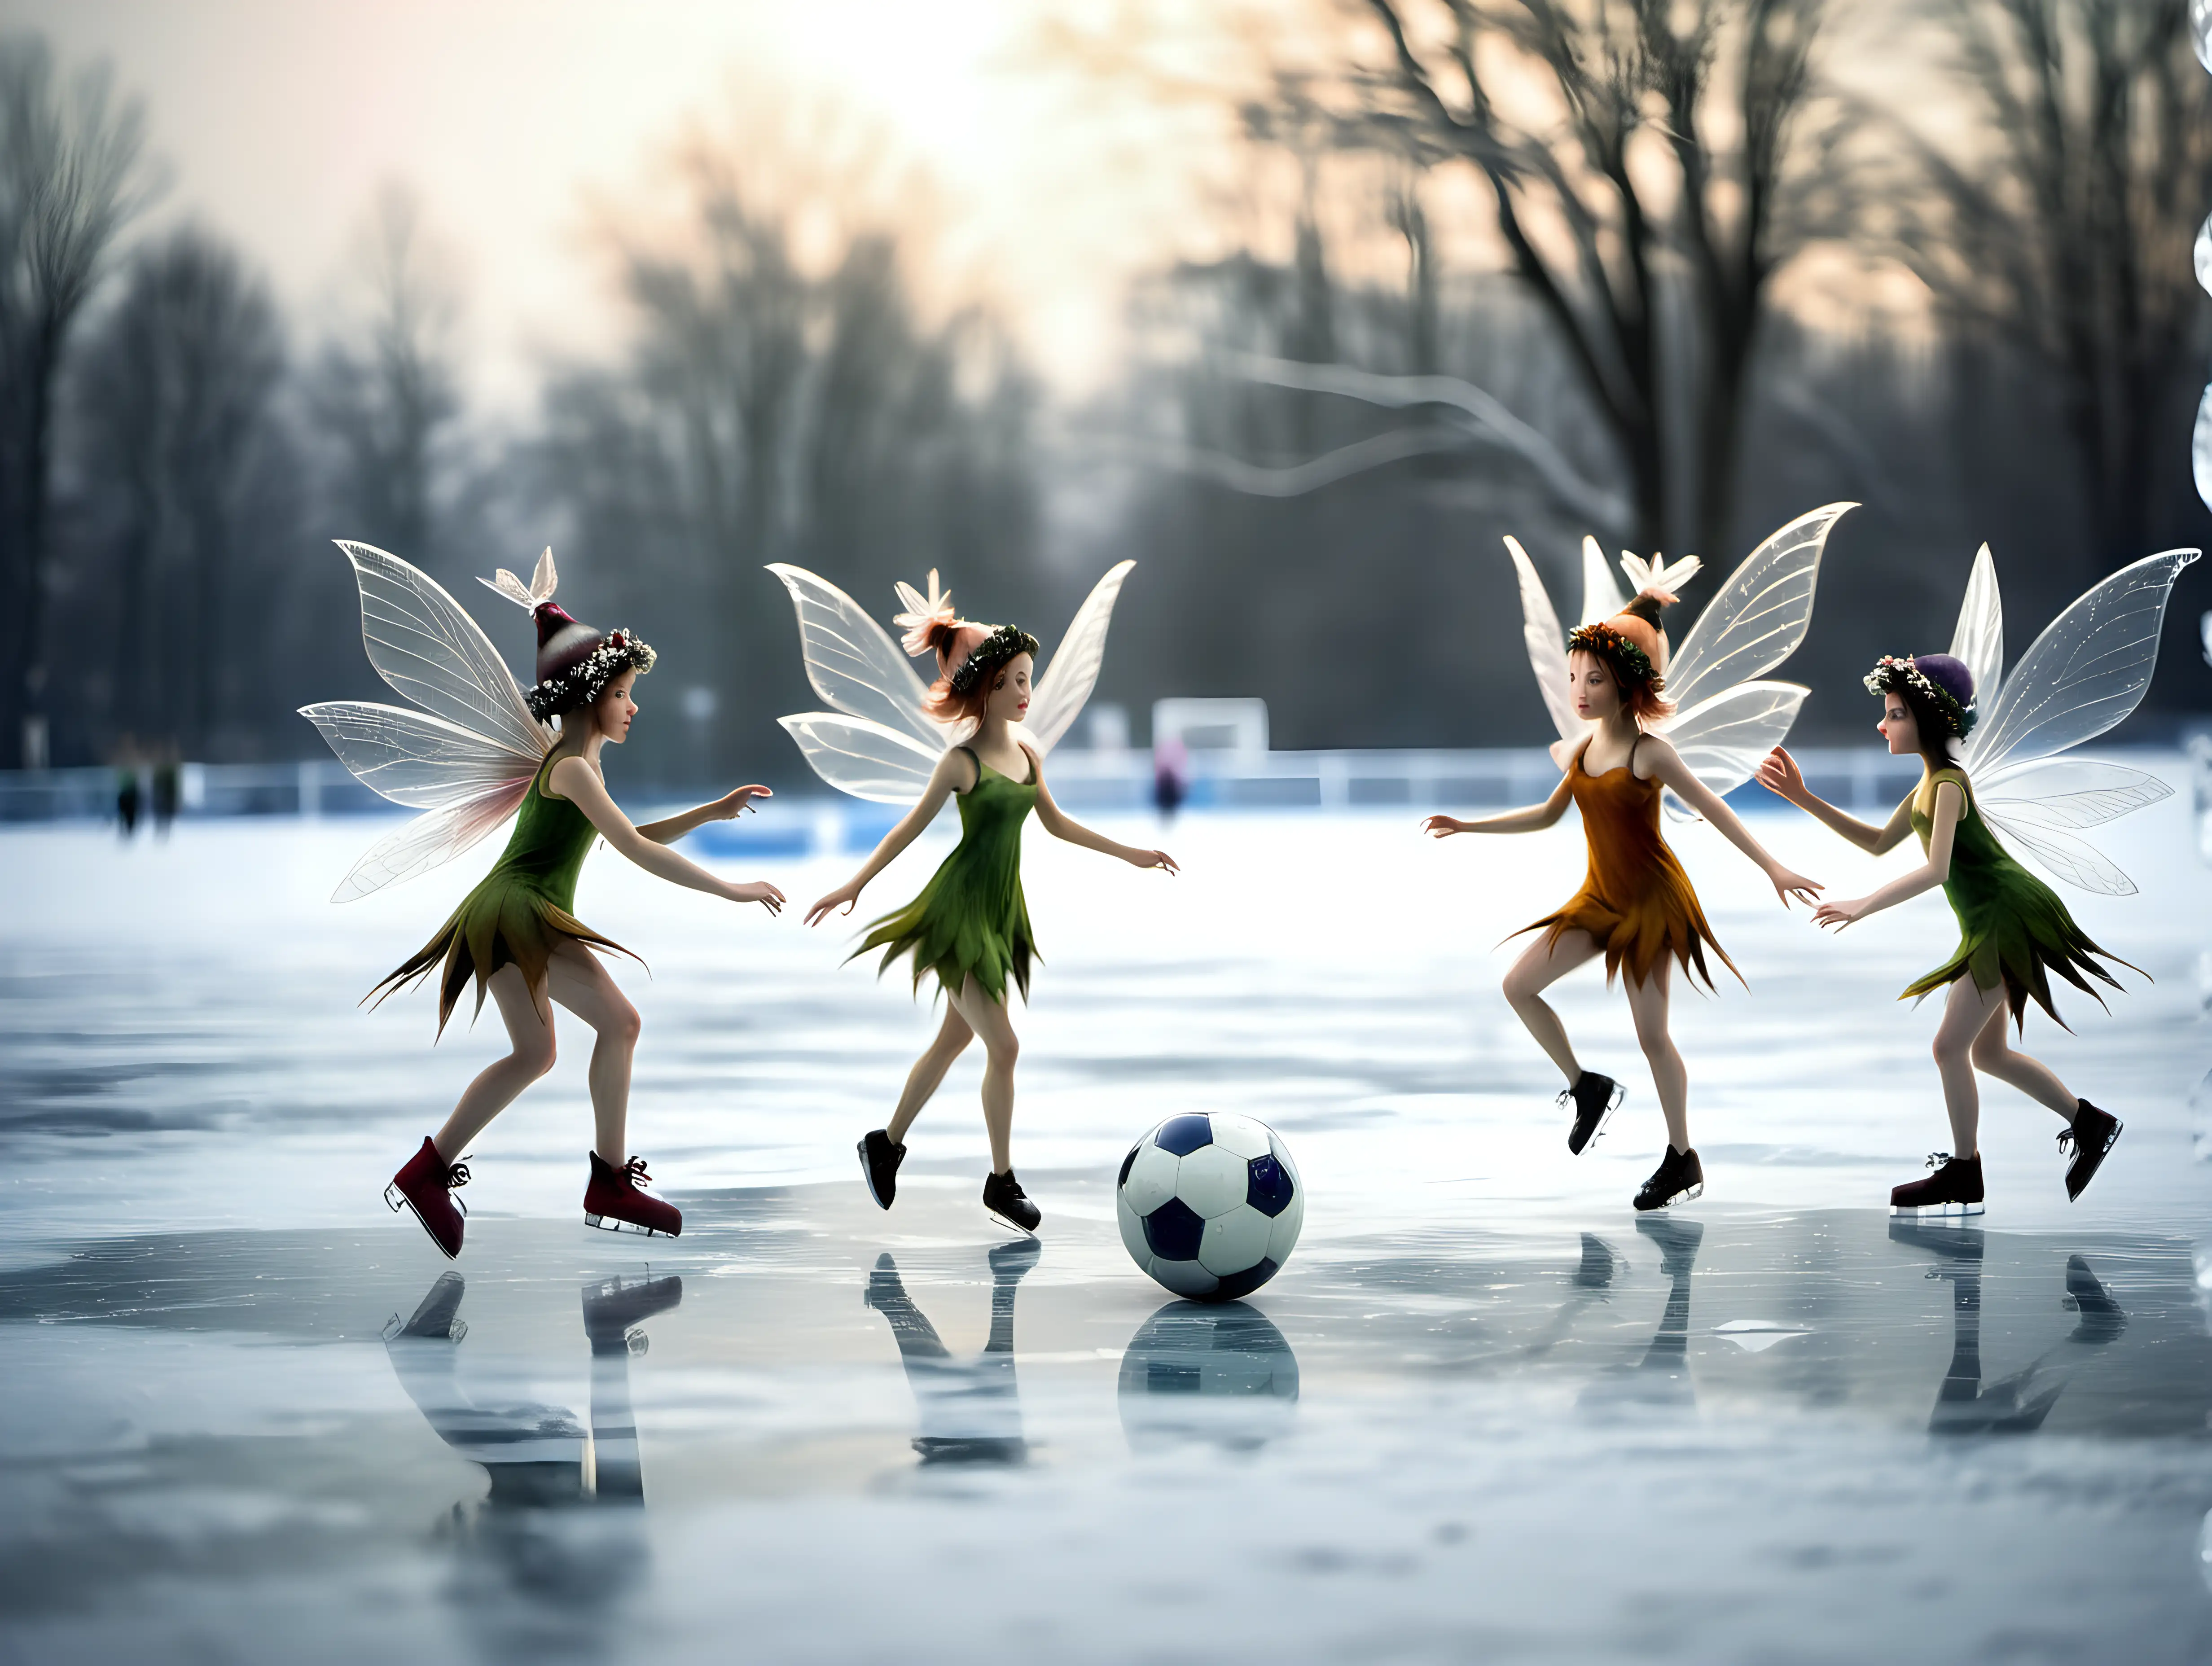 Enchanting Ice Football Match with Playful Fairies